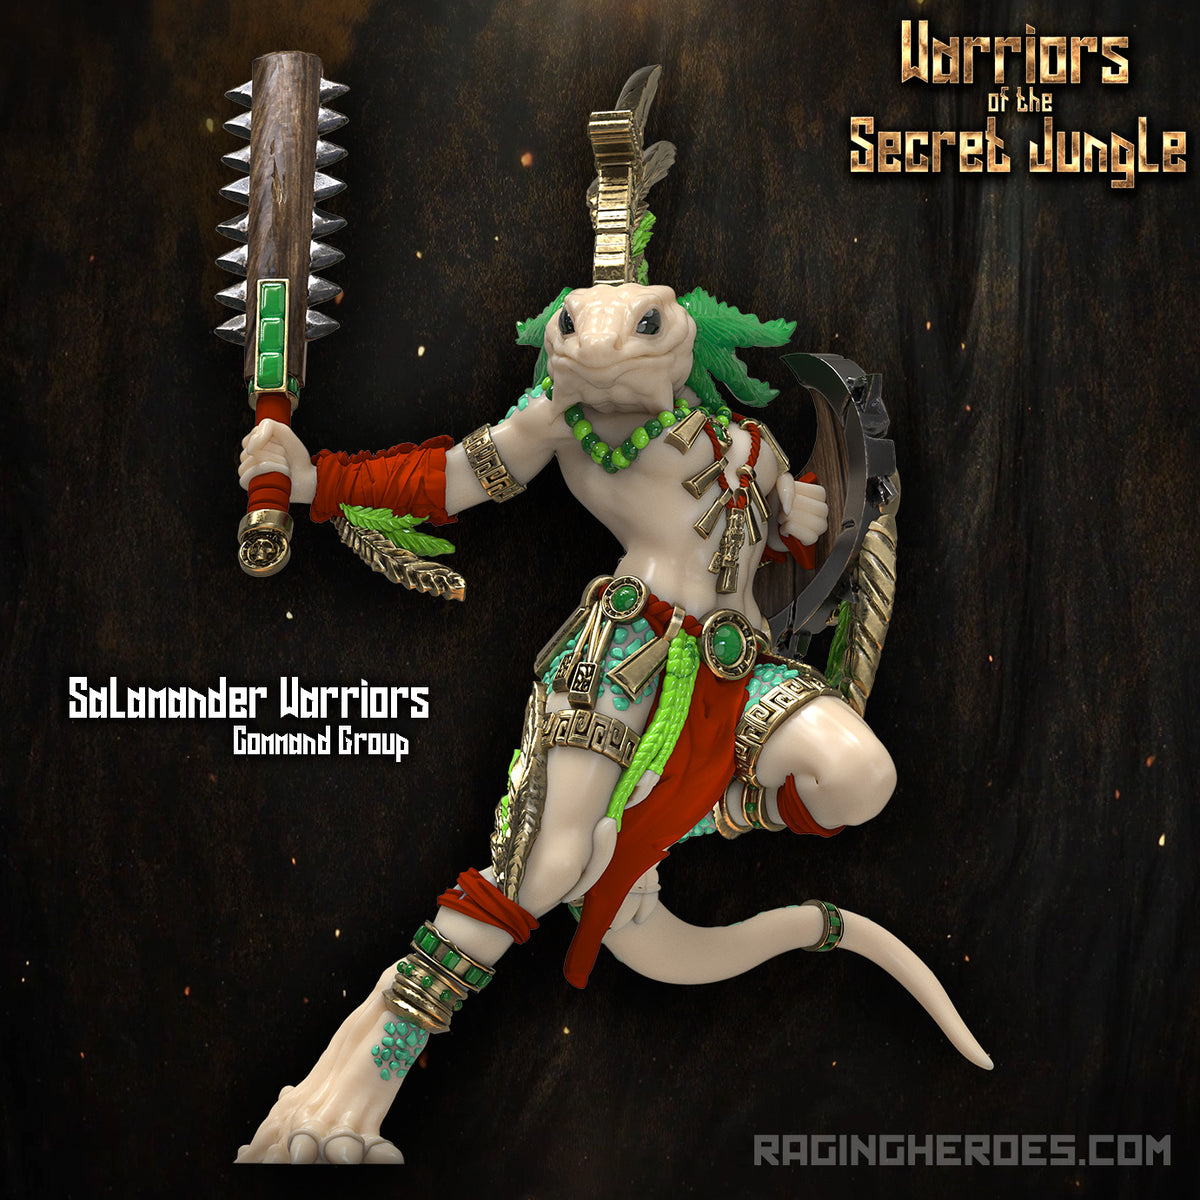 The Warrior of Ras series – Retro365